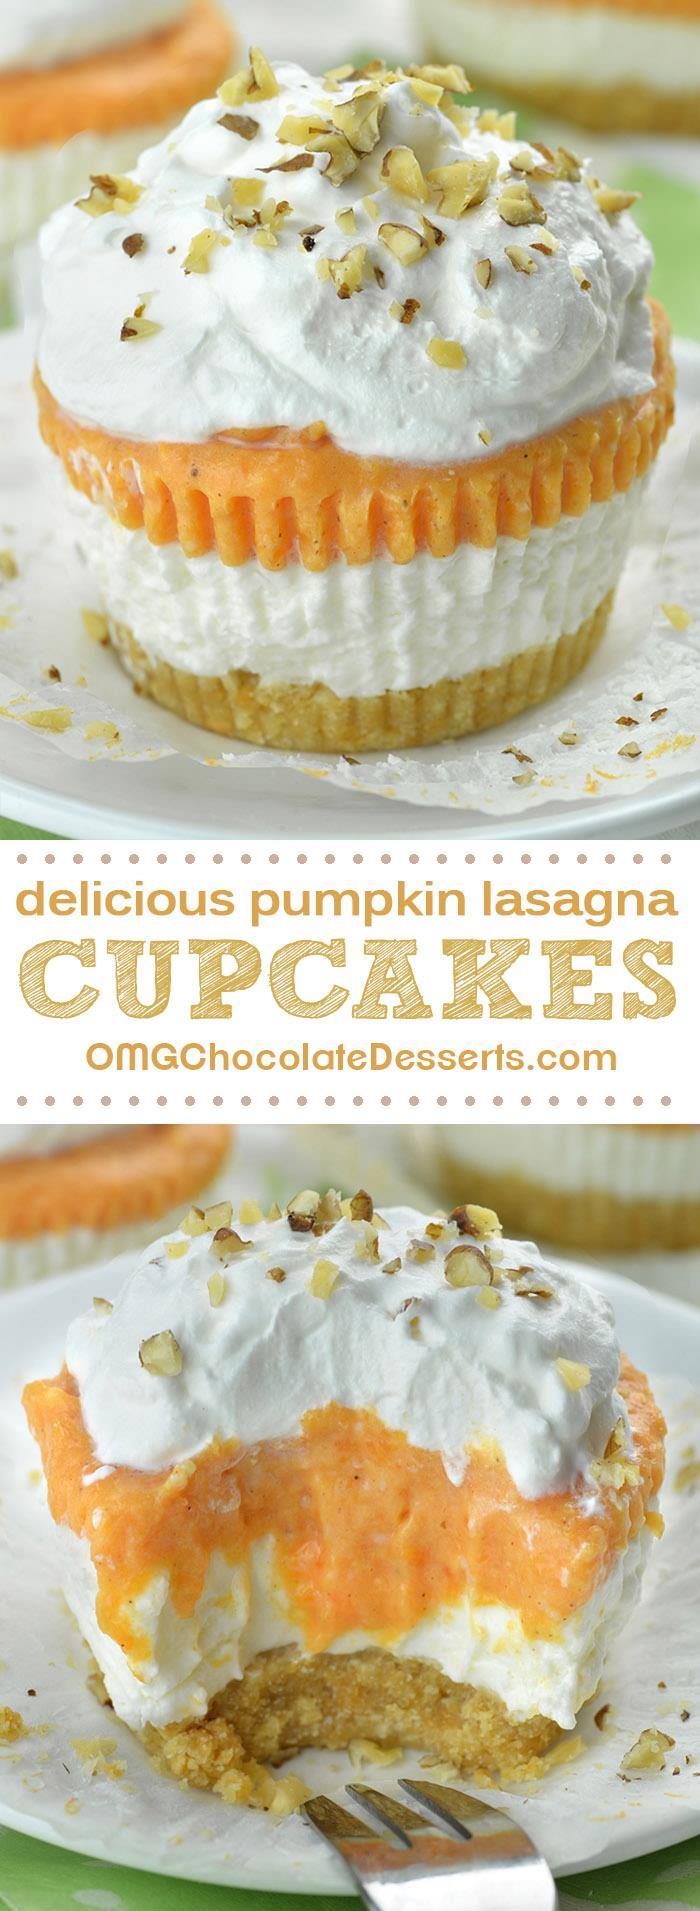 Pumpkin Lasagna Cupcakes – individual portion of DELICIOUS and EASY, NO BAKE PUMPKIN DESSERT!